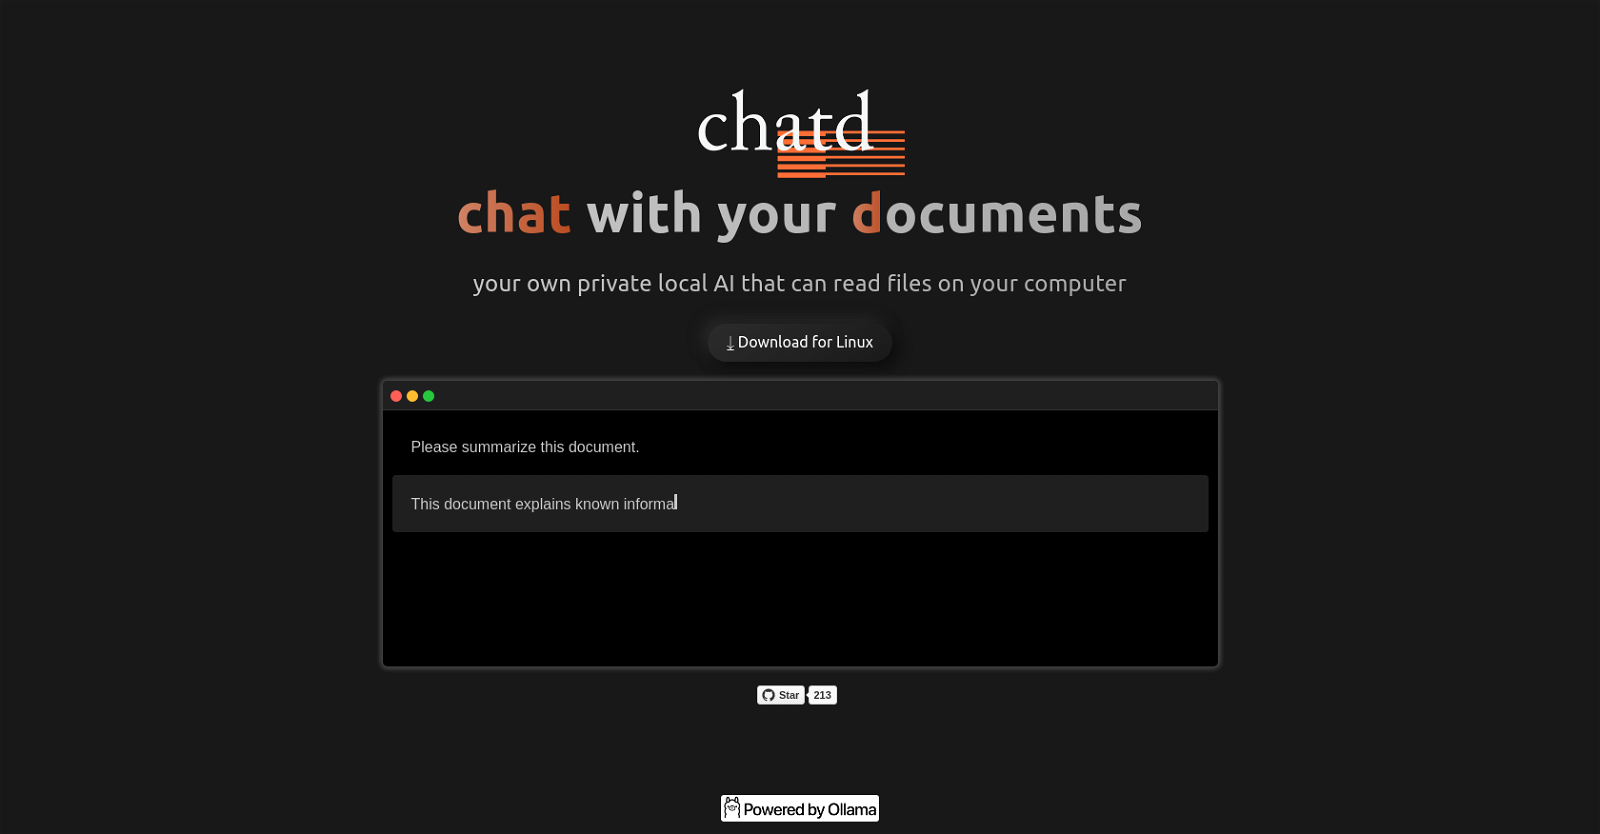 Chatd.ai website